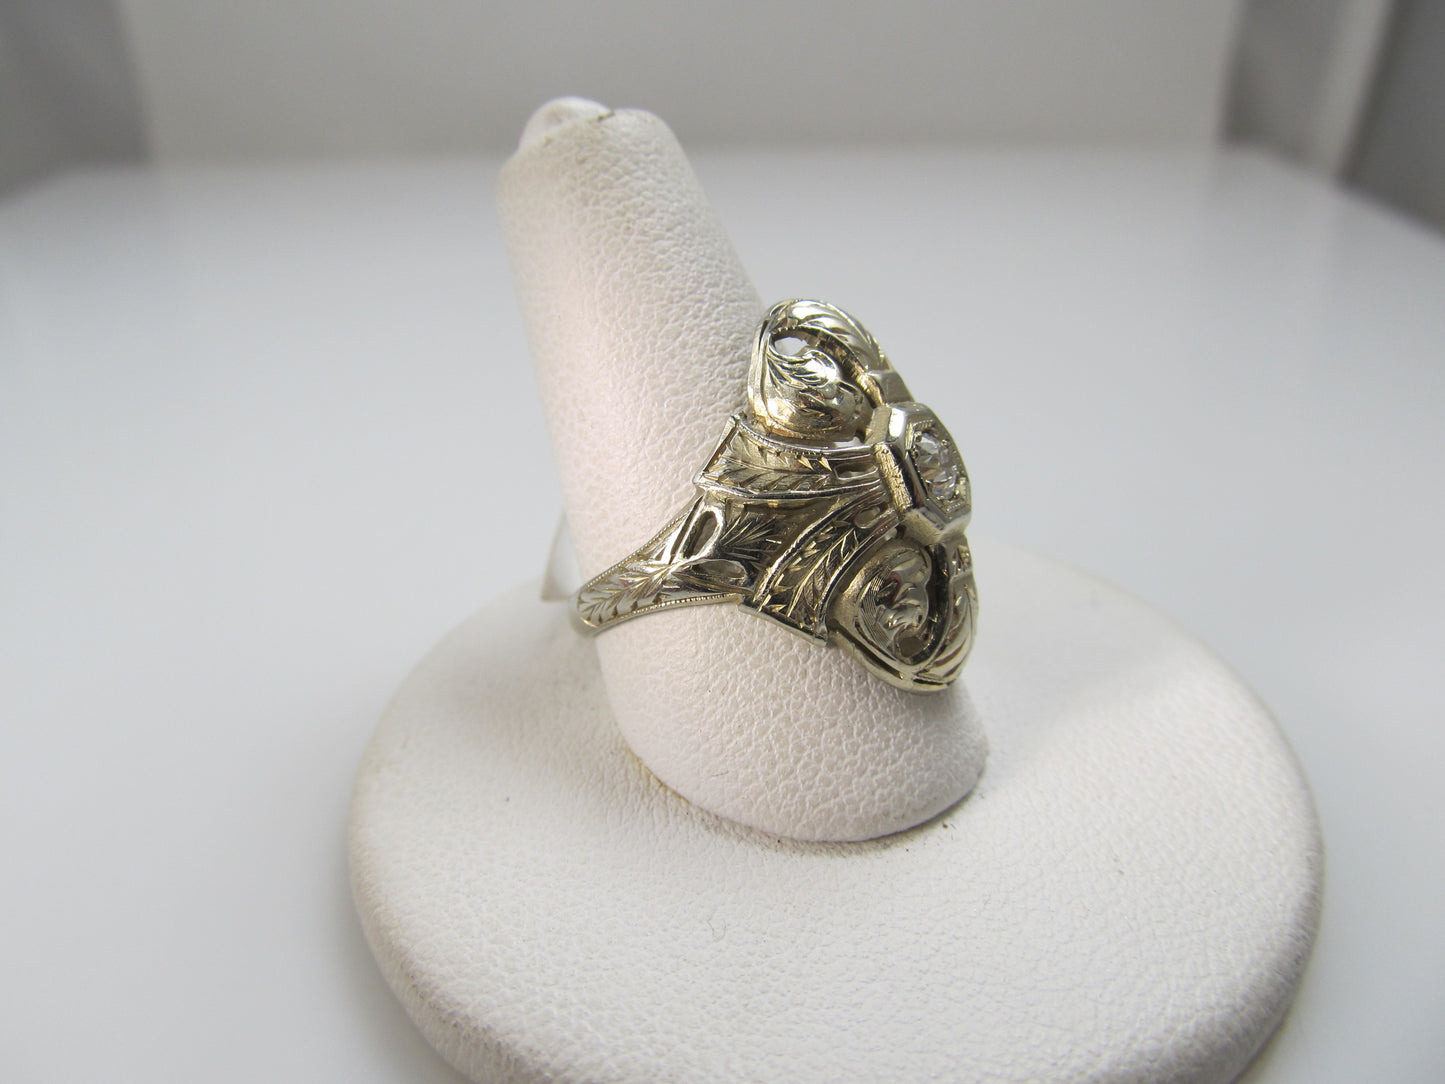 18k white gold filigree ring with a .20ct diamond, circa 1920